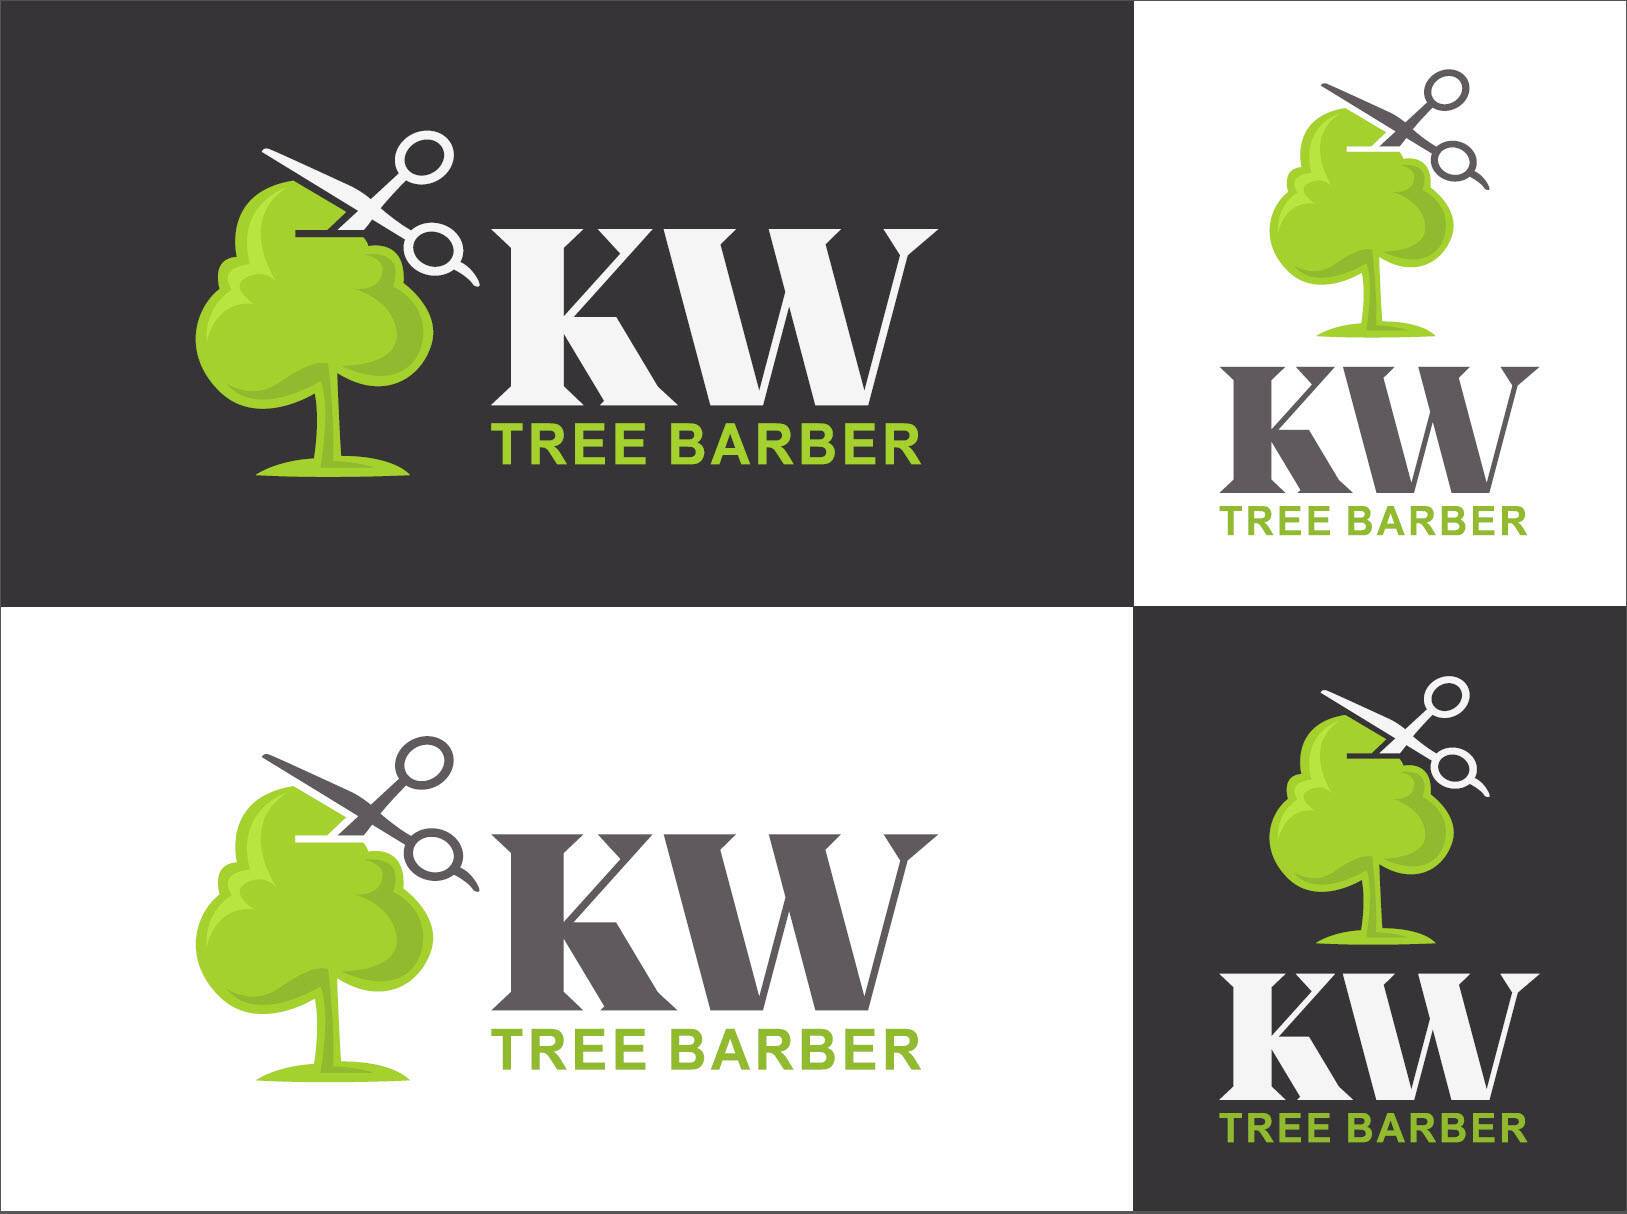 KW Tree Barber